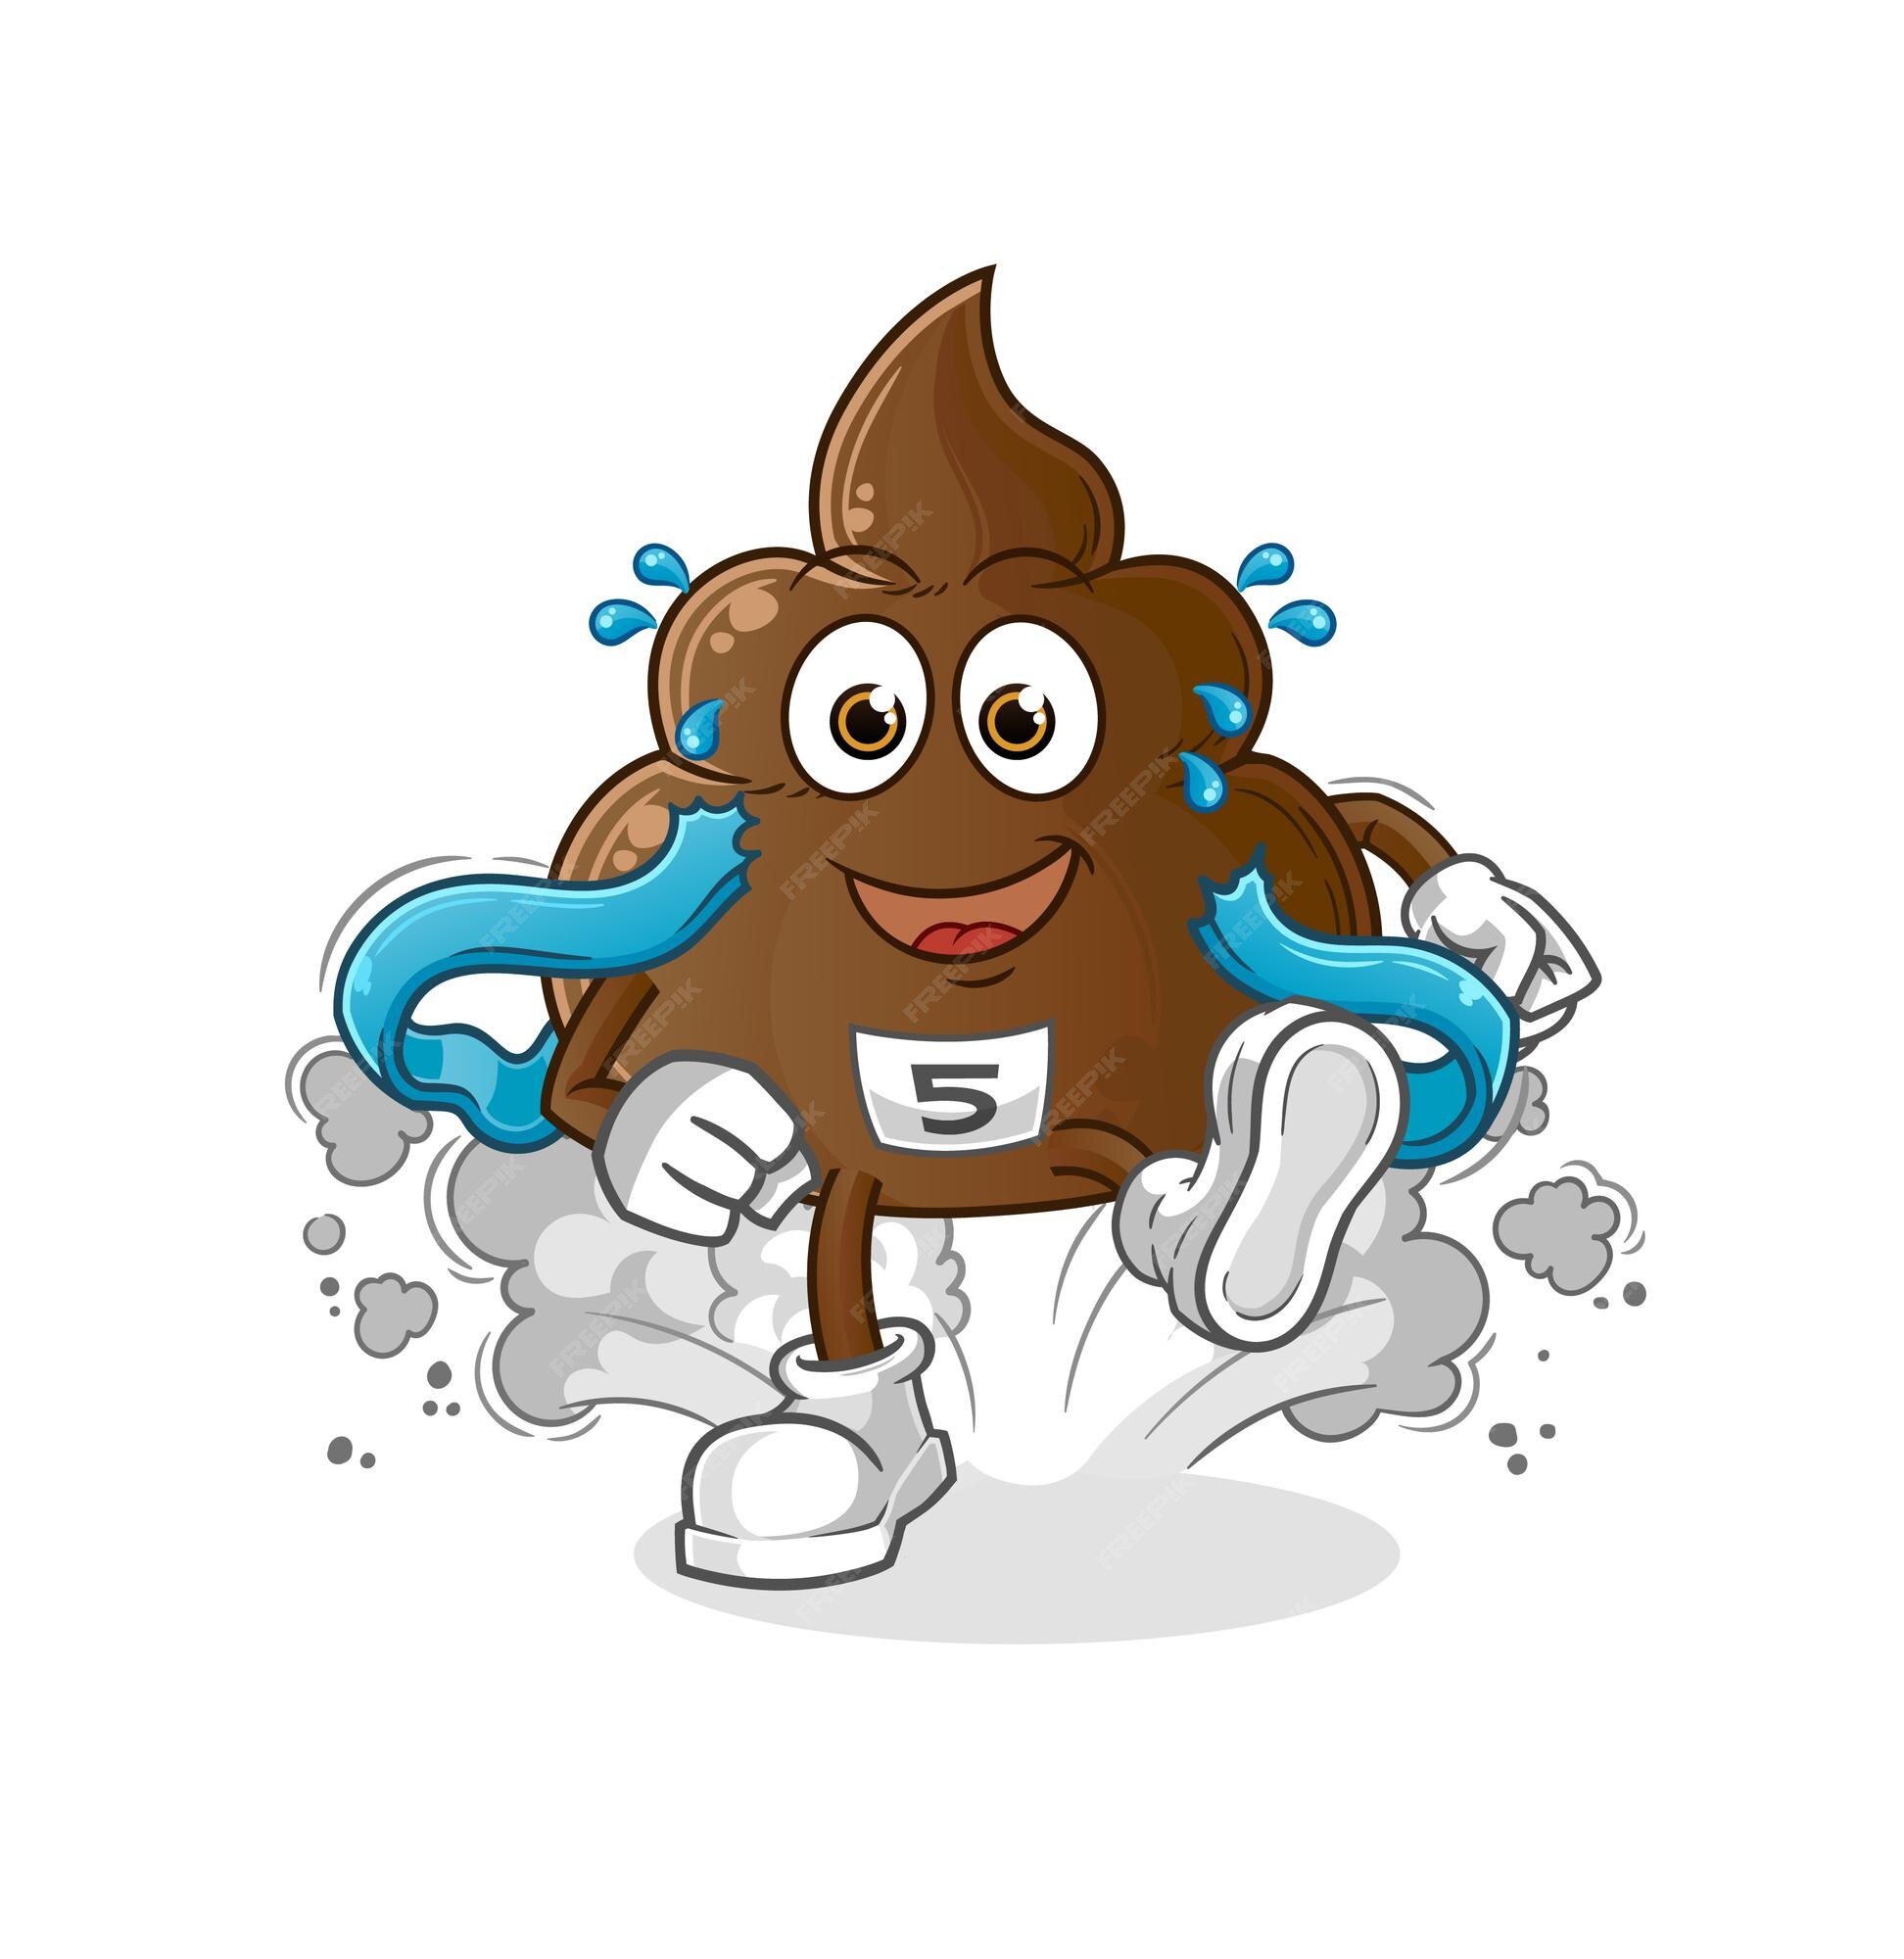 Premium Vector The Poop Runner Cartoon Mascot